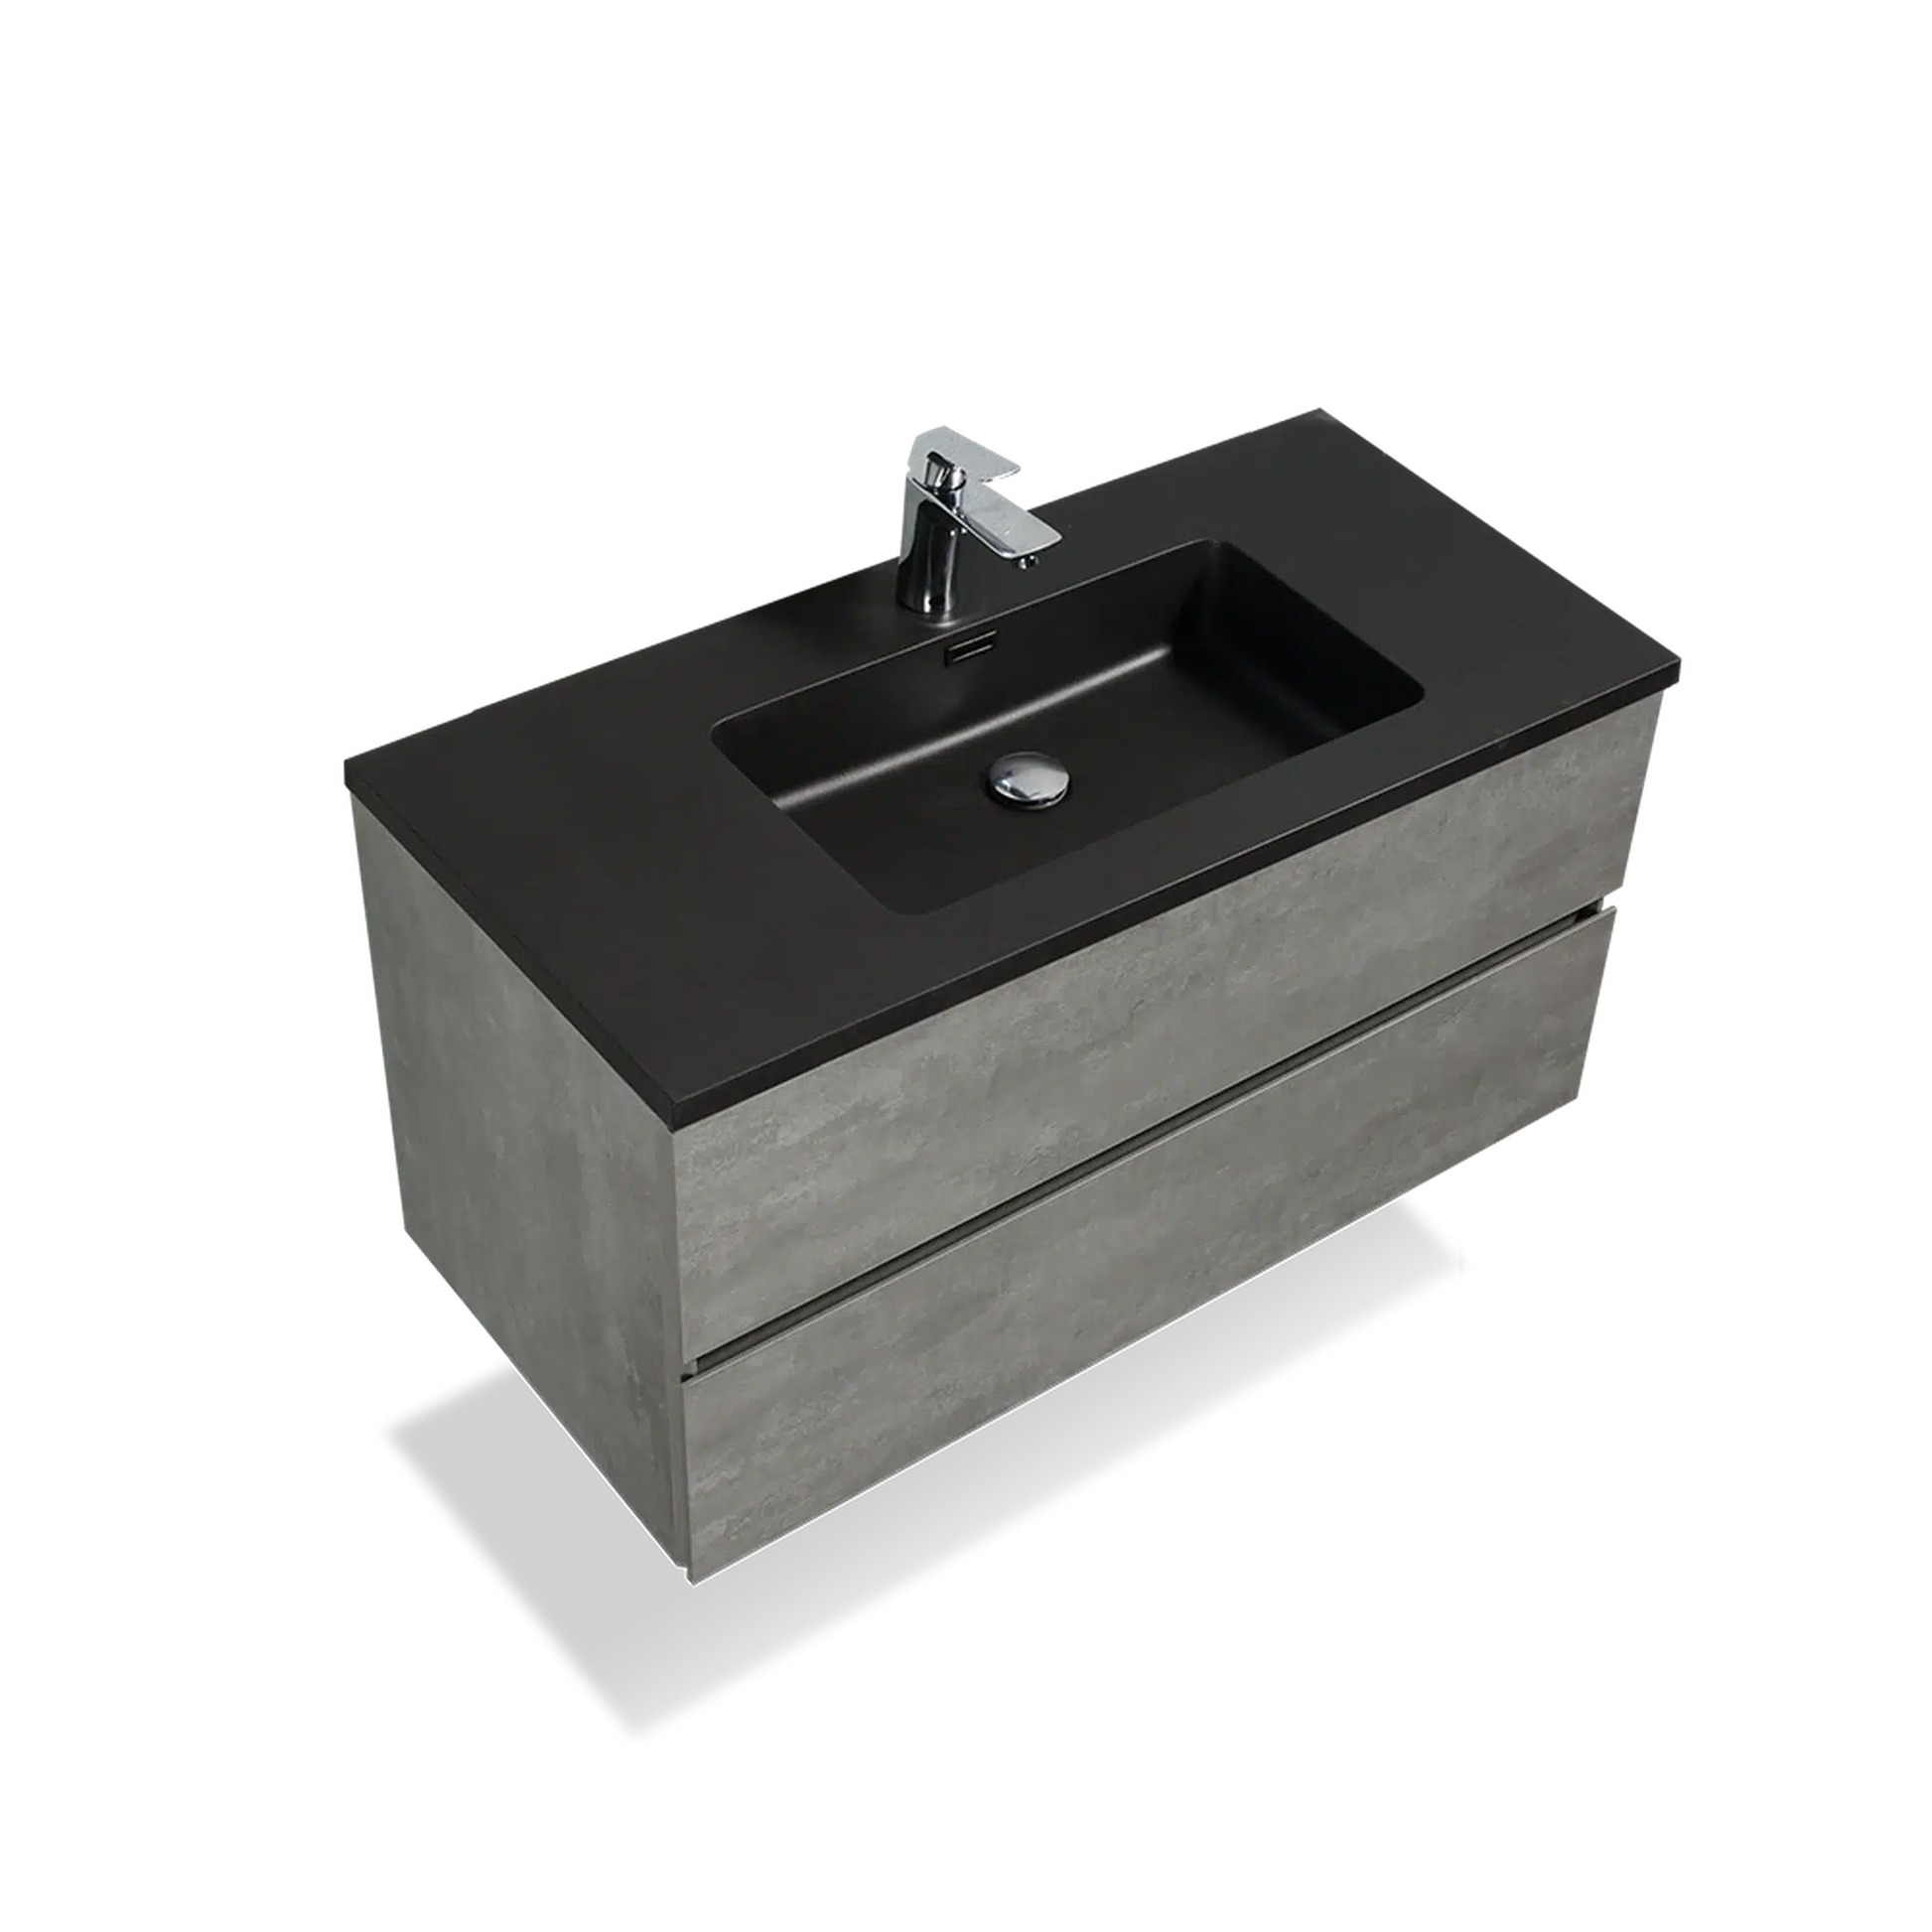 TONA Edi 48" Cement Gray & Black Wall-Mounted Bathroom Vanity With Black Quartz Integrated Top & Sink